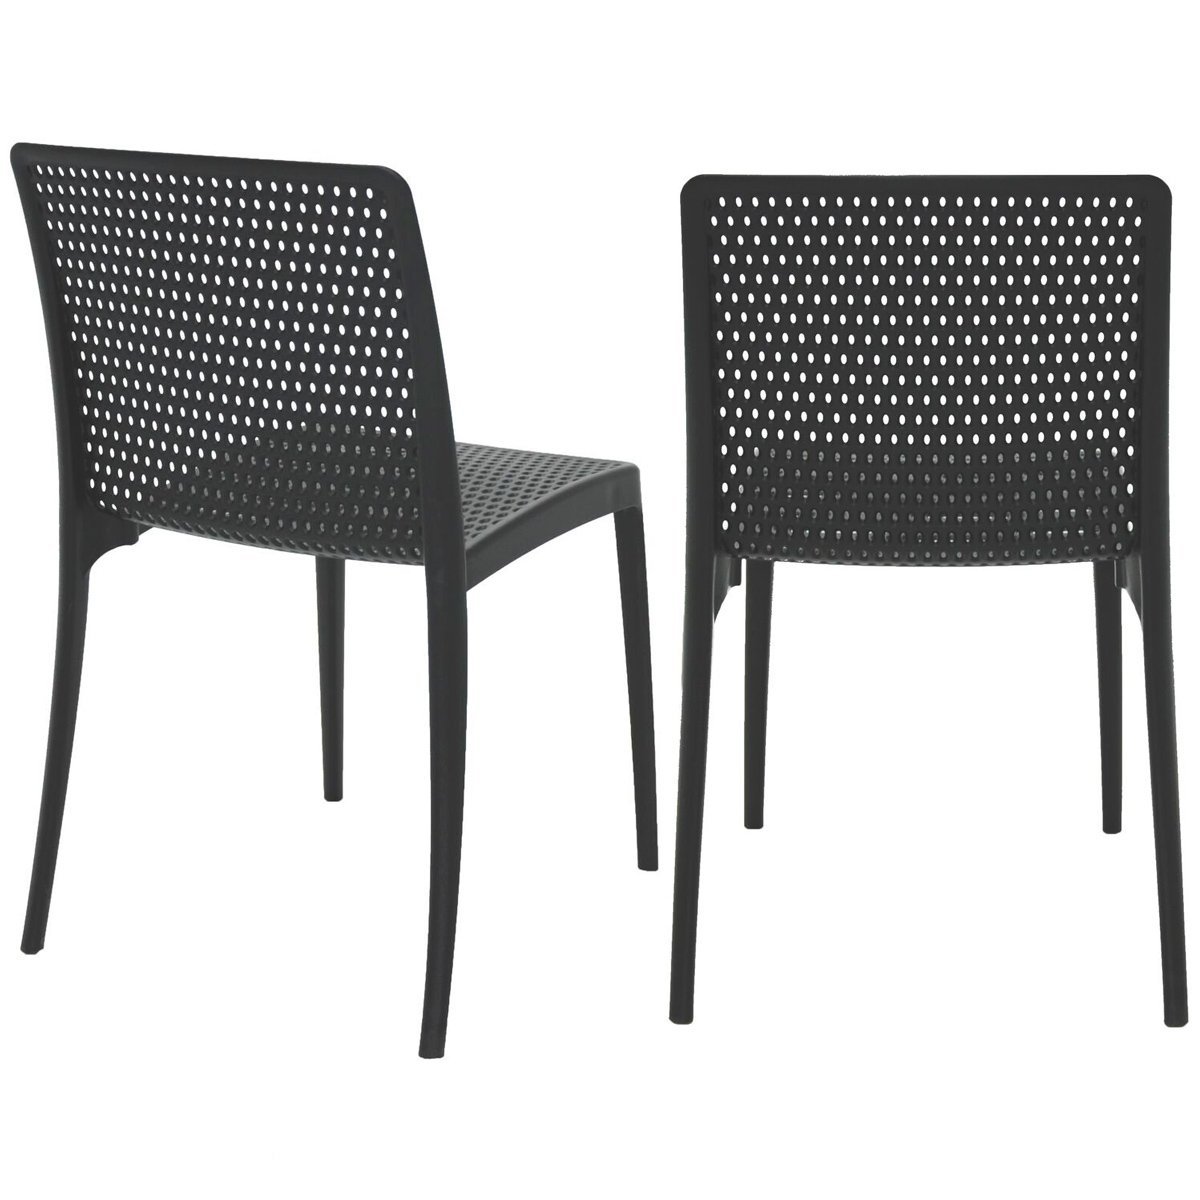 Conjunto 4 Cadeiras de Plástico Polipropileno com Fibra de Vidro Isabelle - Tramontina - Preto 92150 - 3